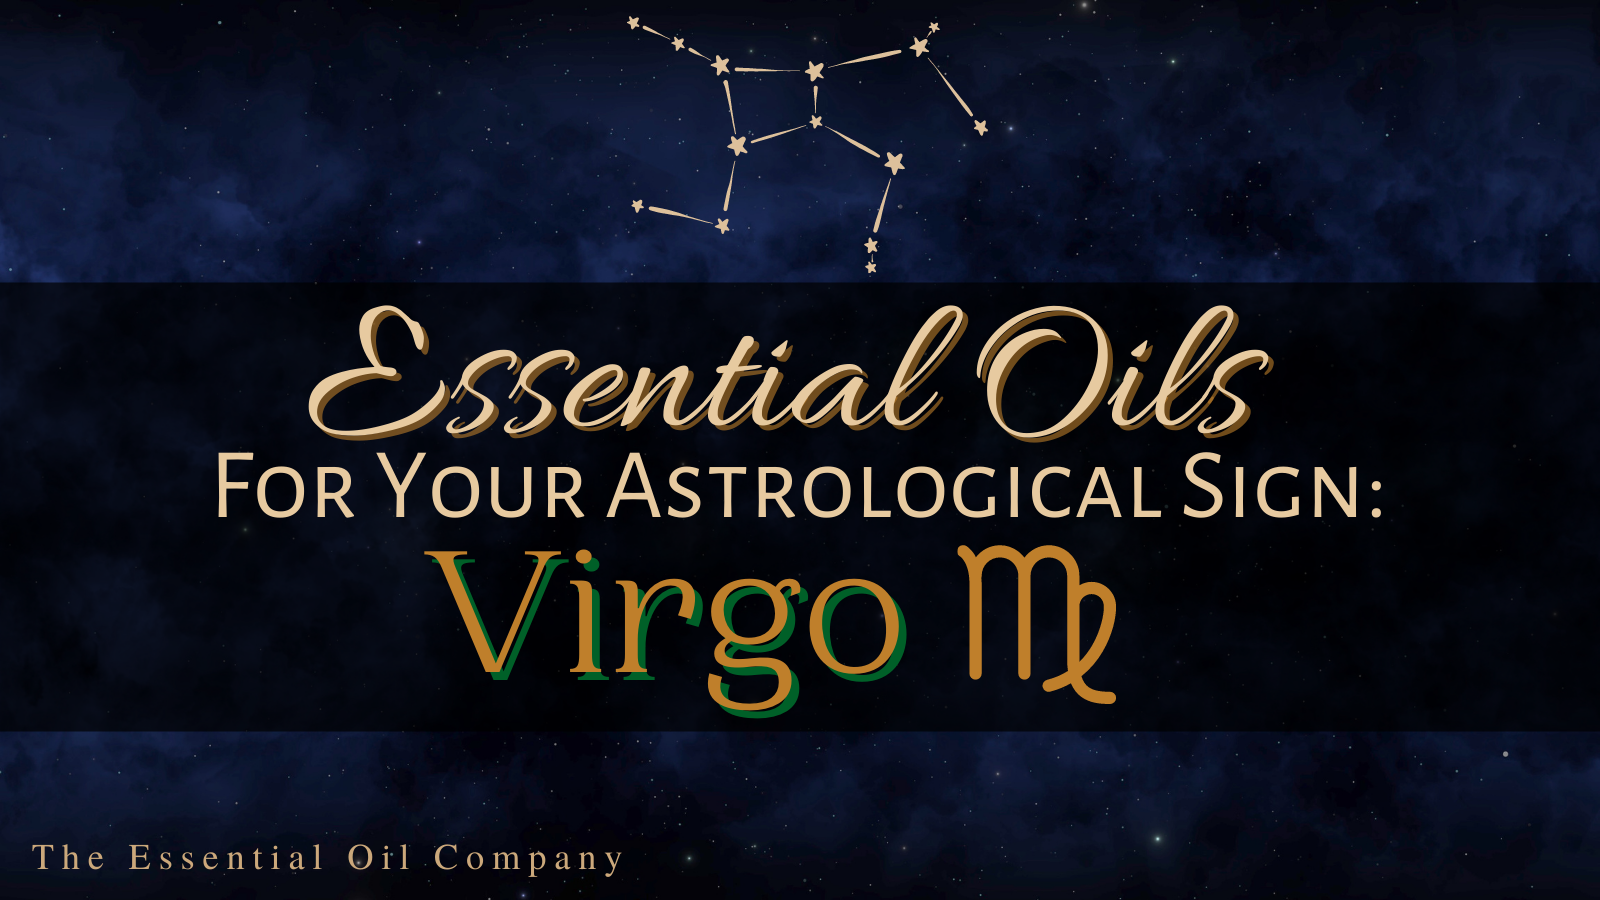 Essential Oils for Your Astrological Sign: Virgo